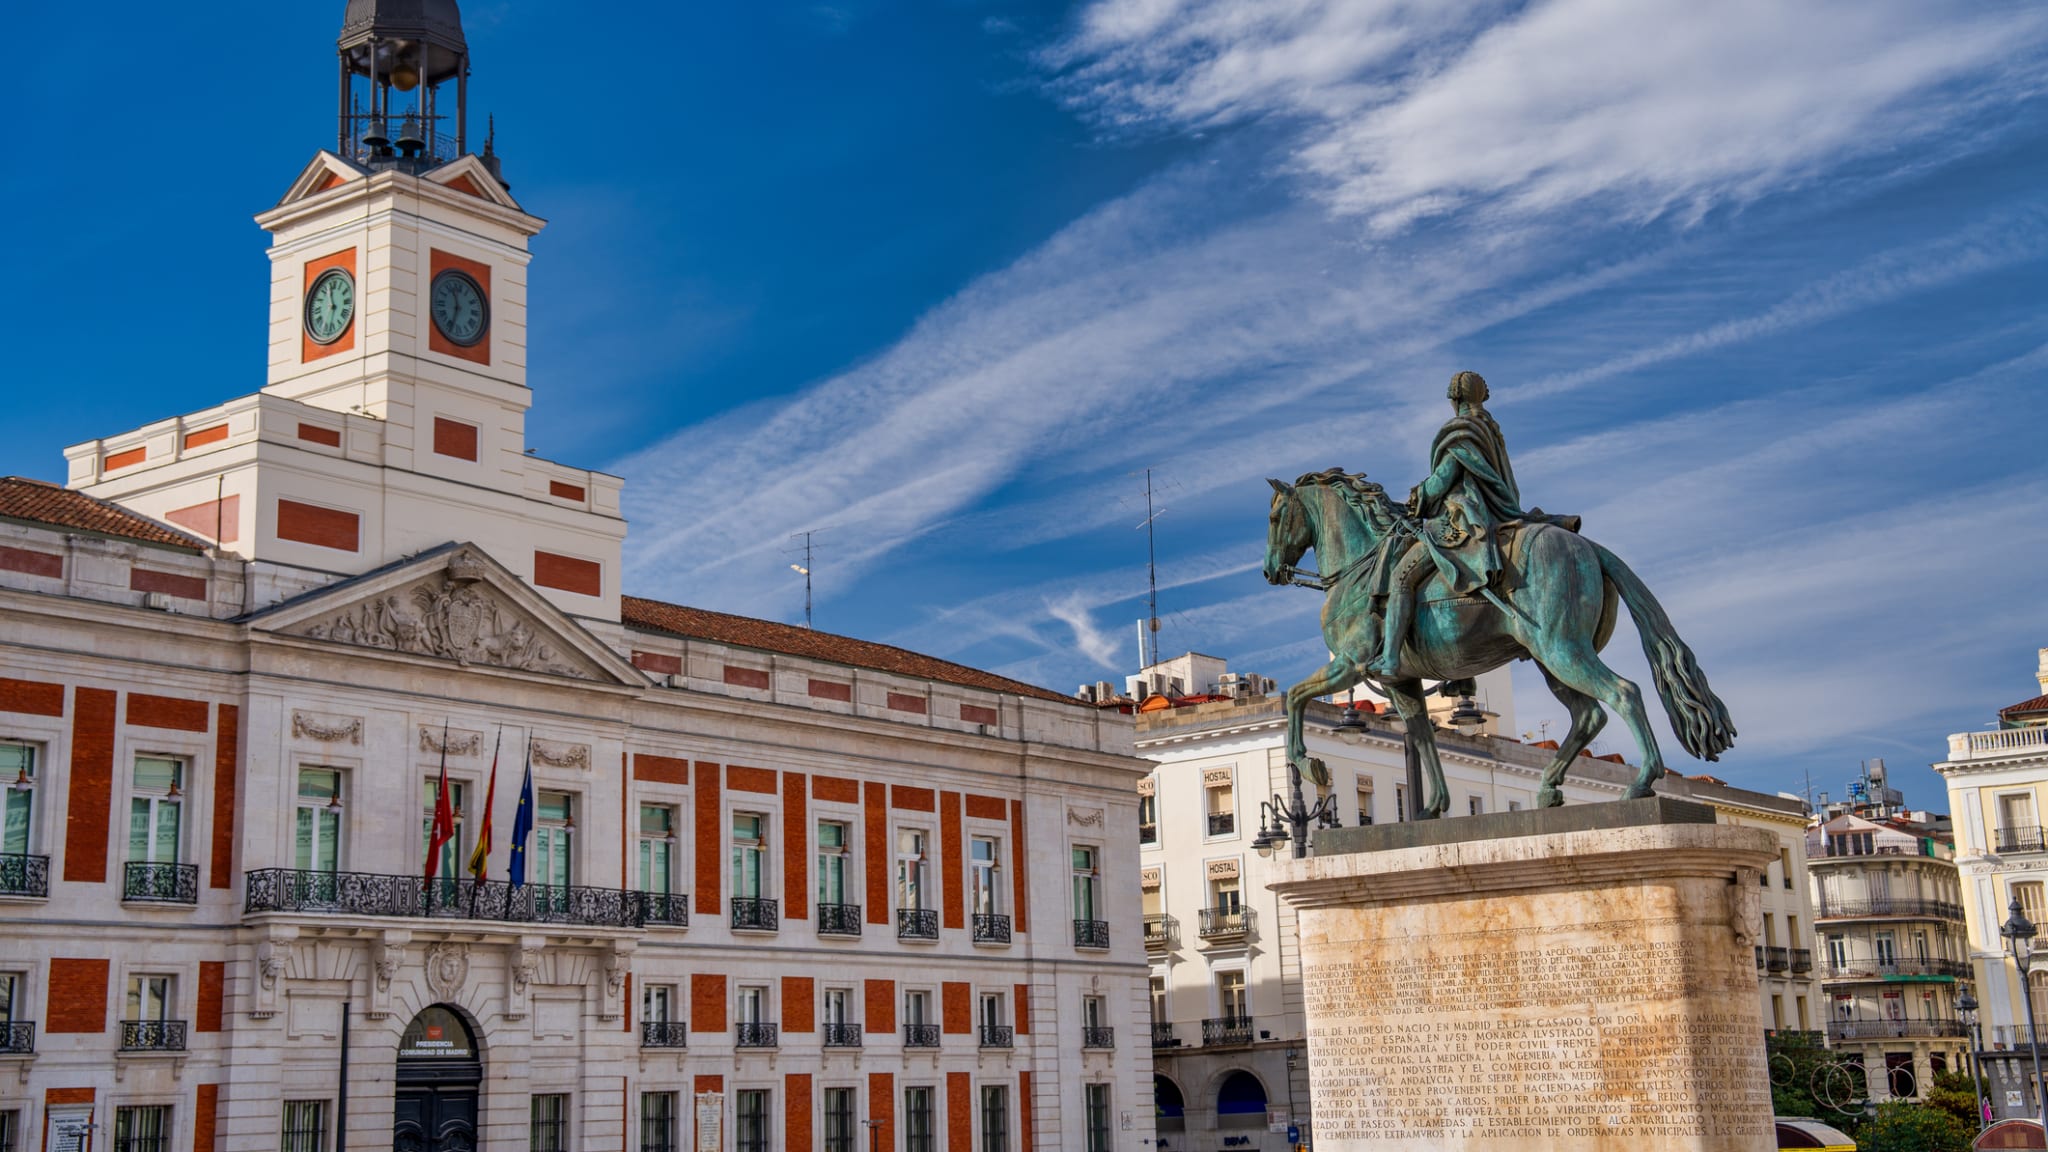 Puerta del Sol, Madrid, Spanien © jovannig/iStock / Getty Images Plus via Getty Images